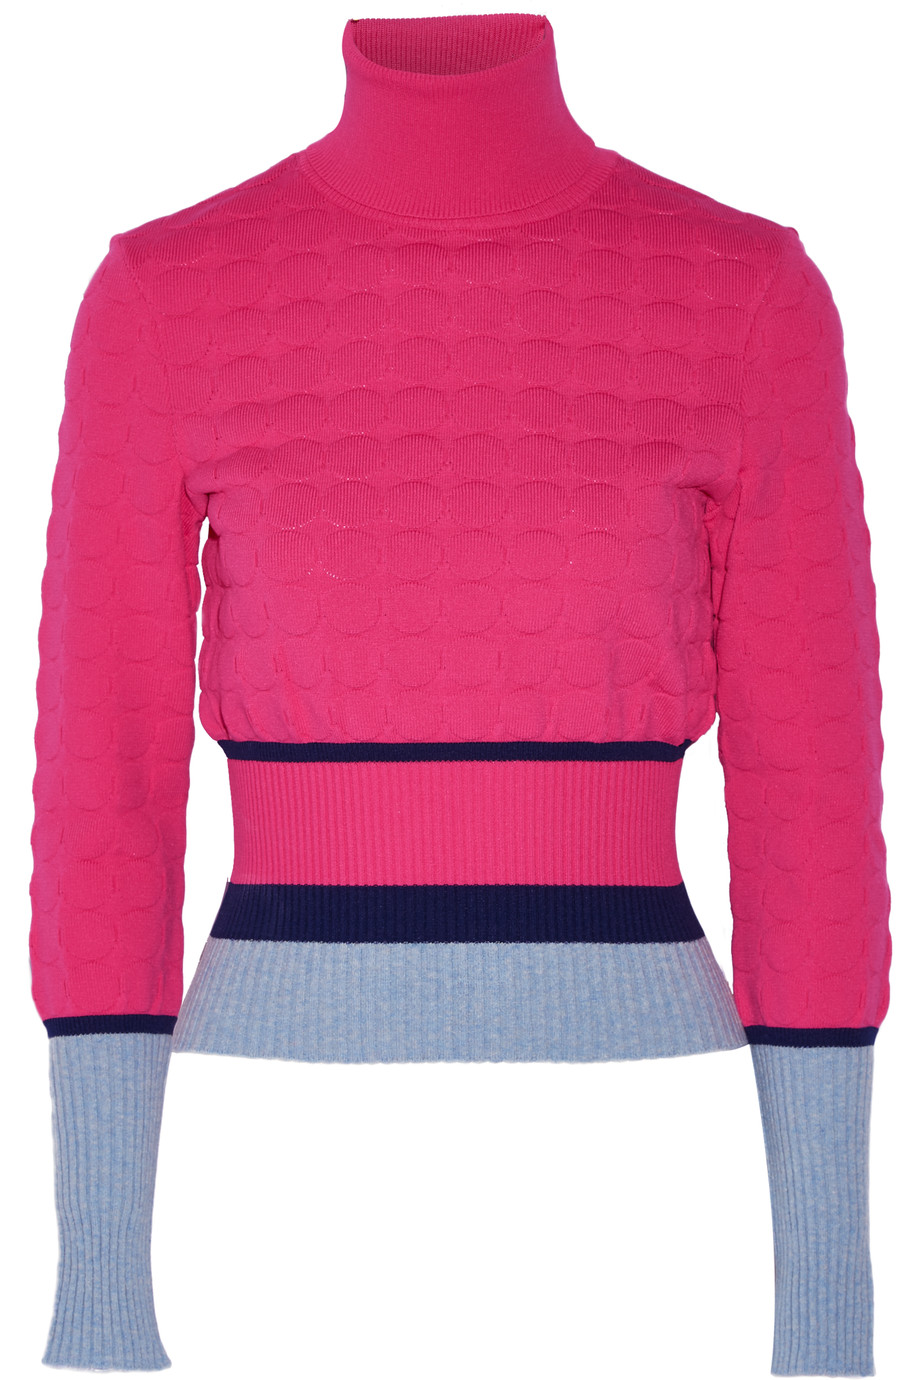 Mary Katrantzou Textured-knit Turtleneck Sweater